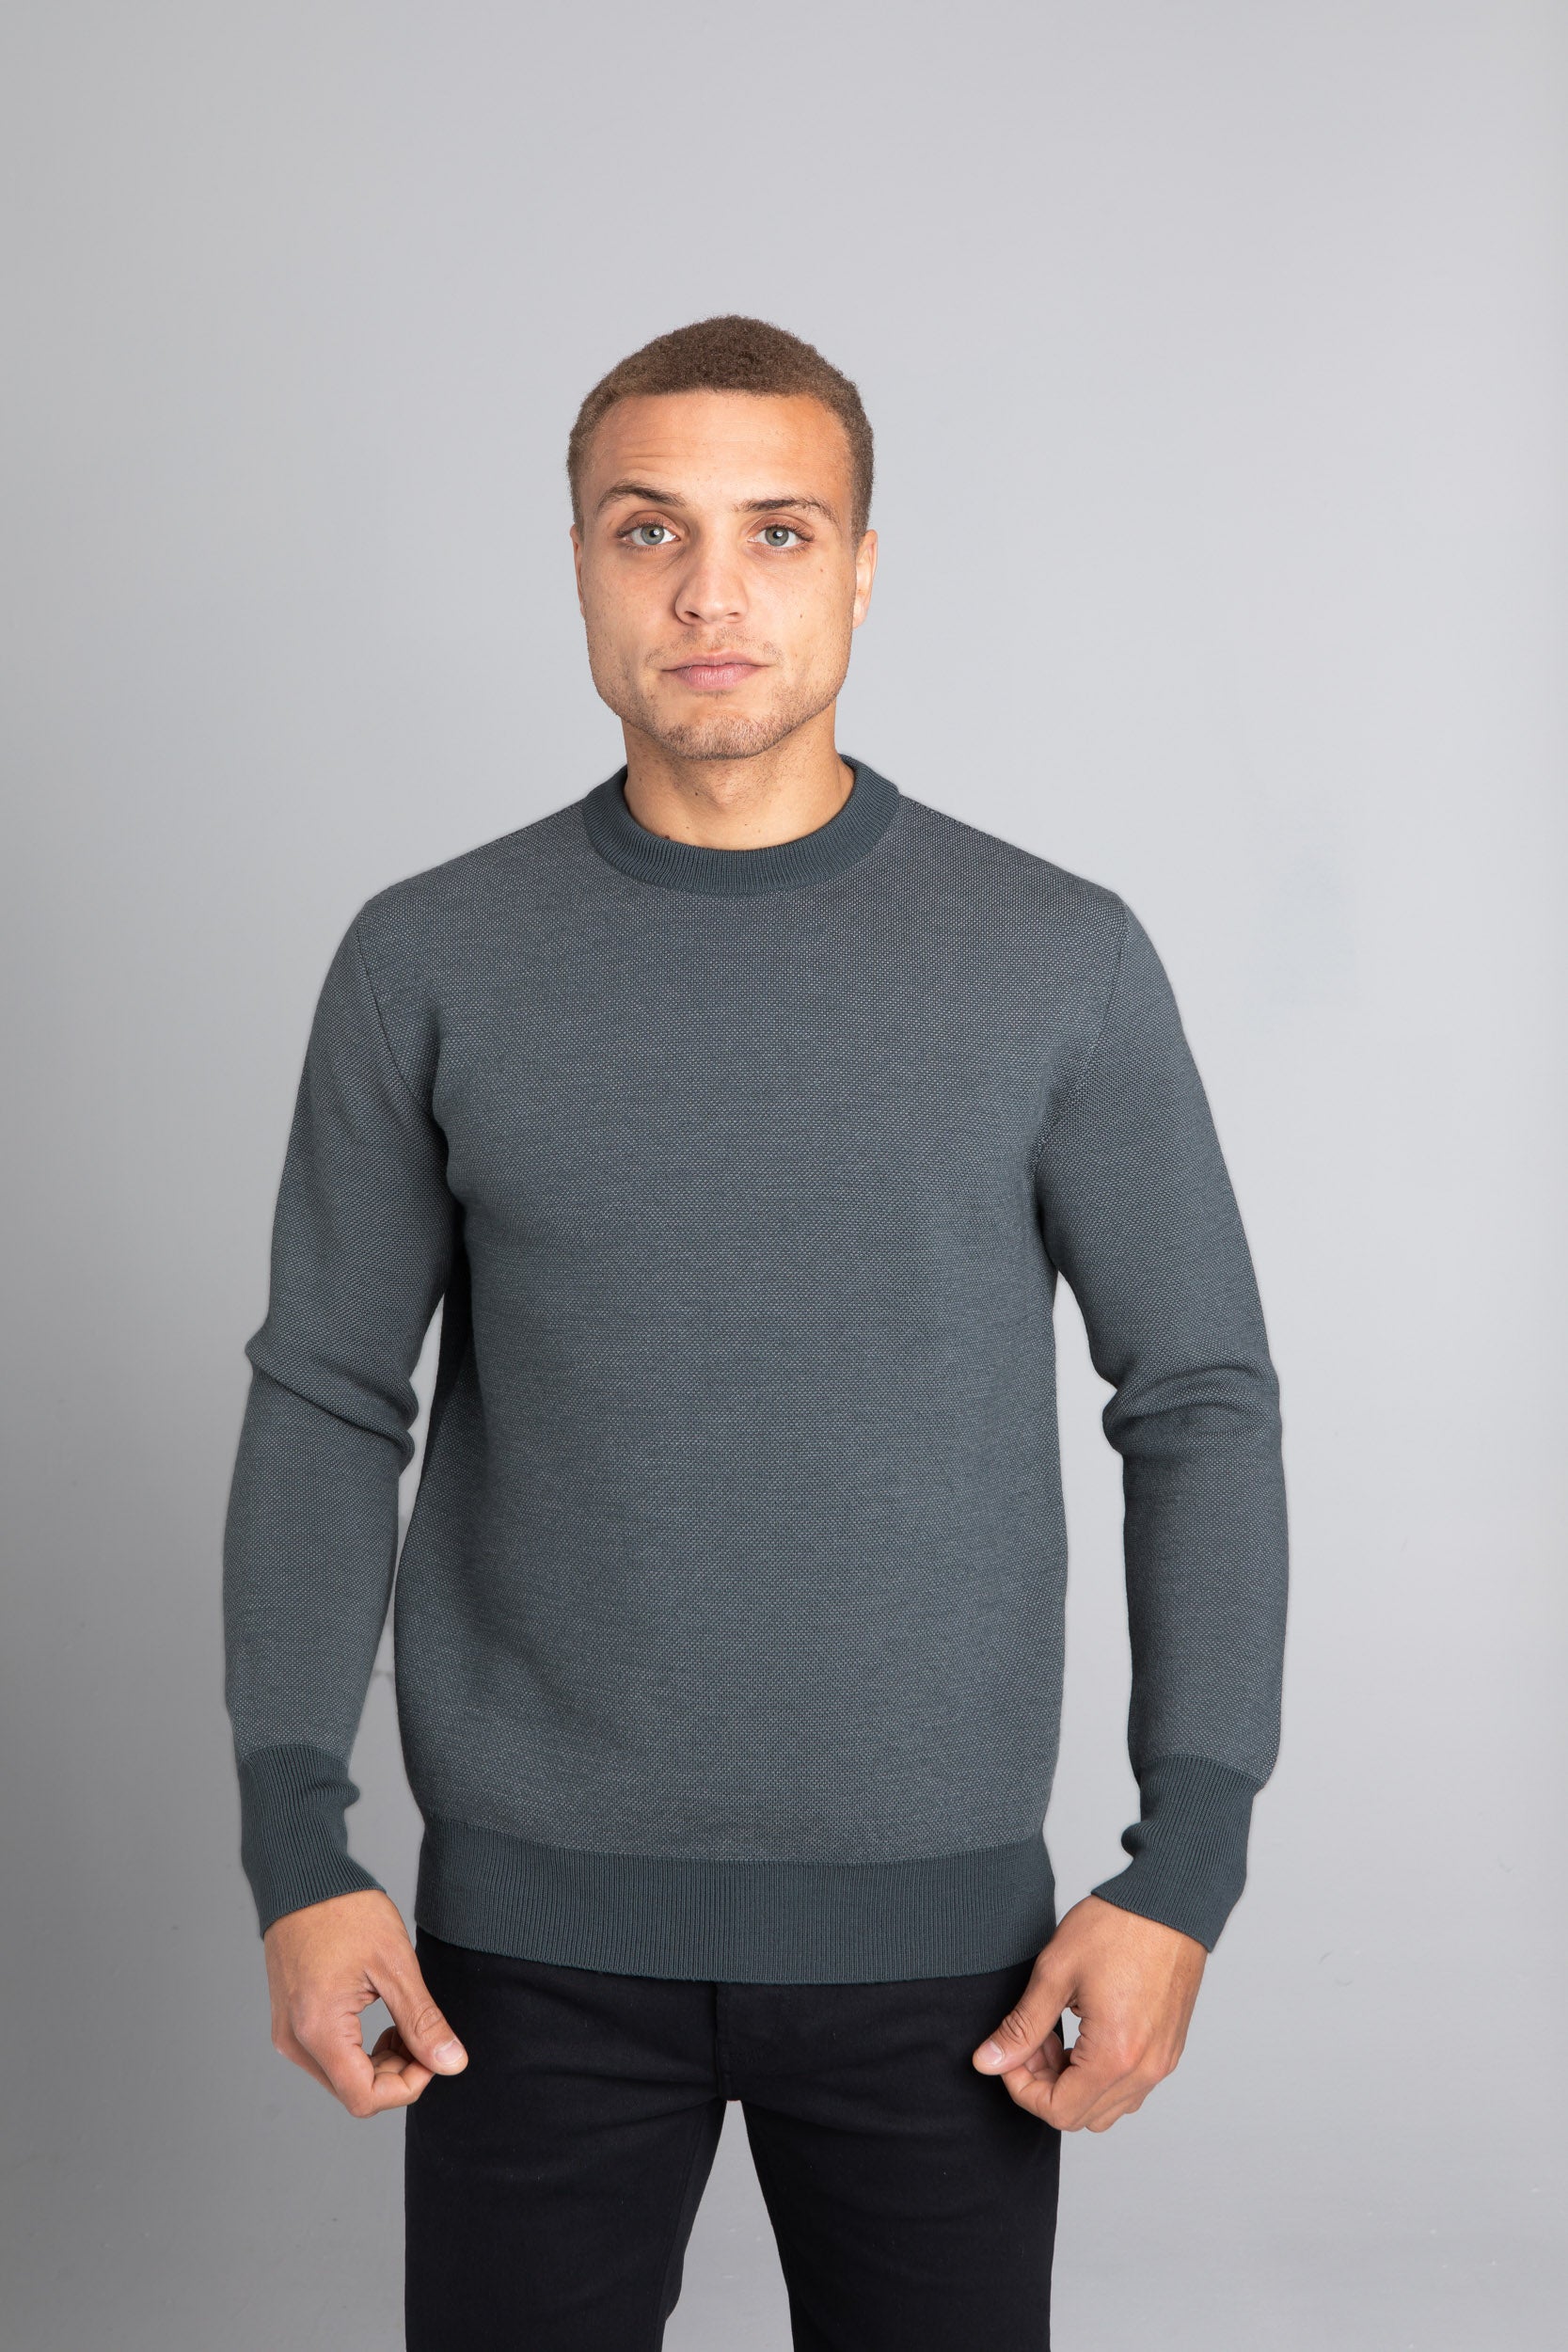 Model Wearing The Merino wool jaquard sweater Navy Grey, front - Unborn